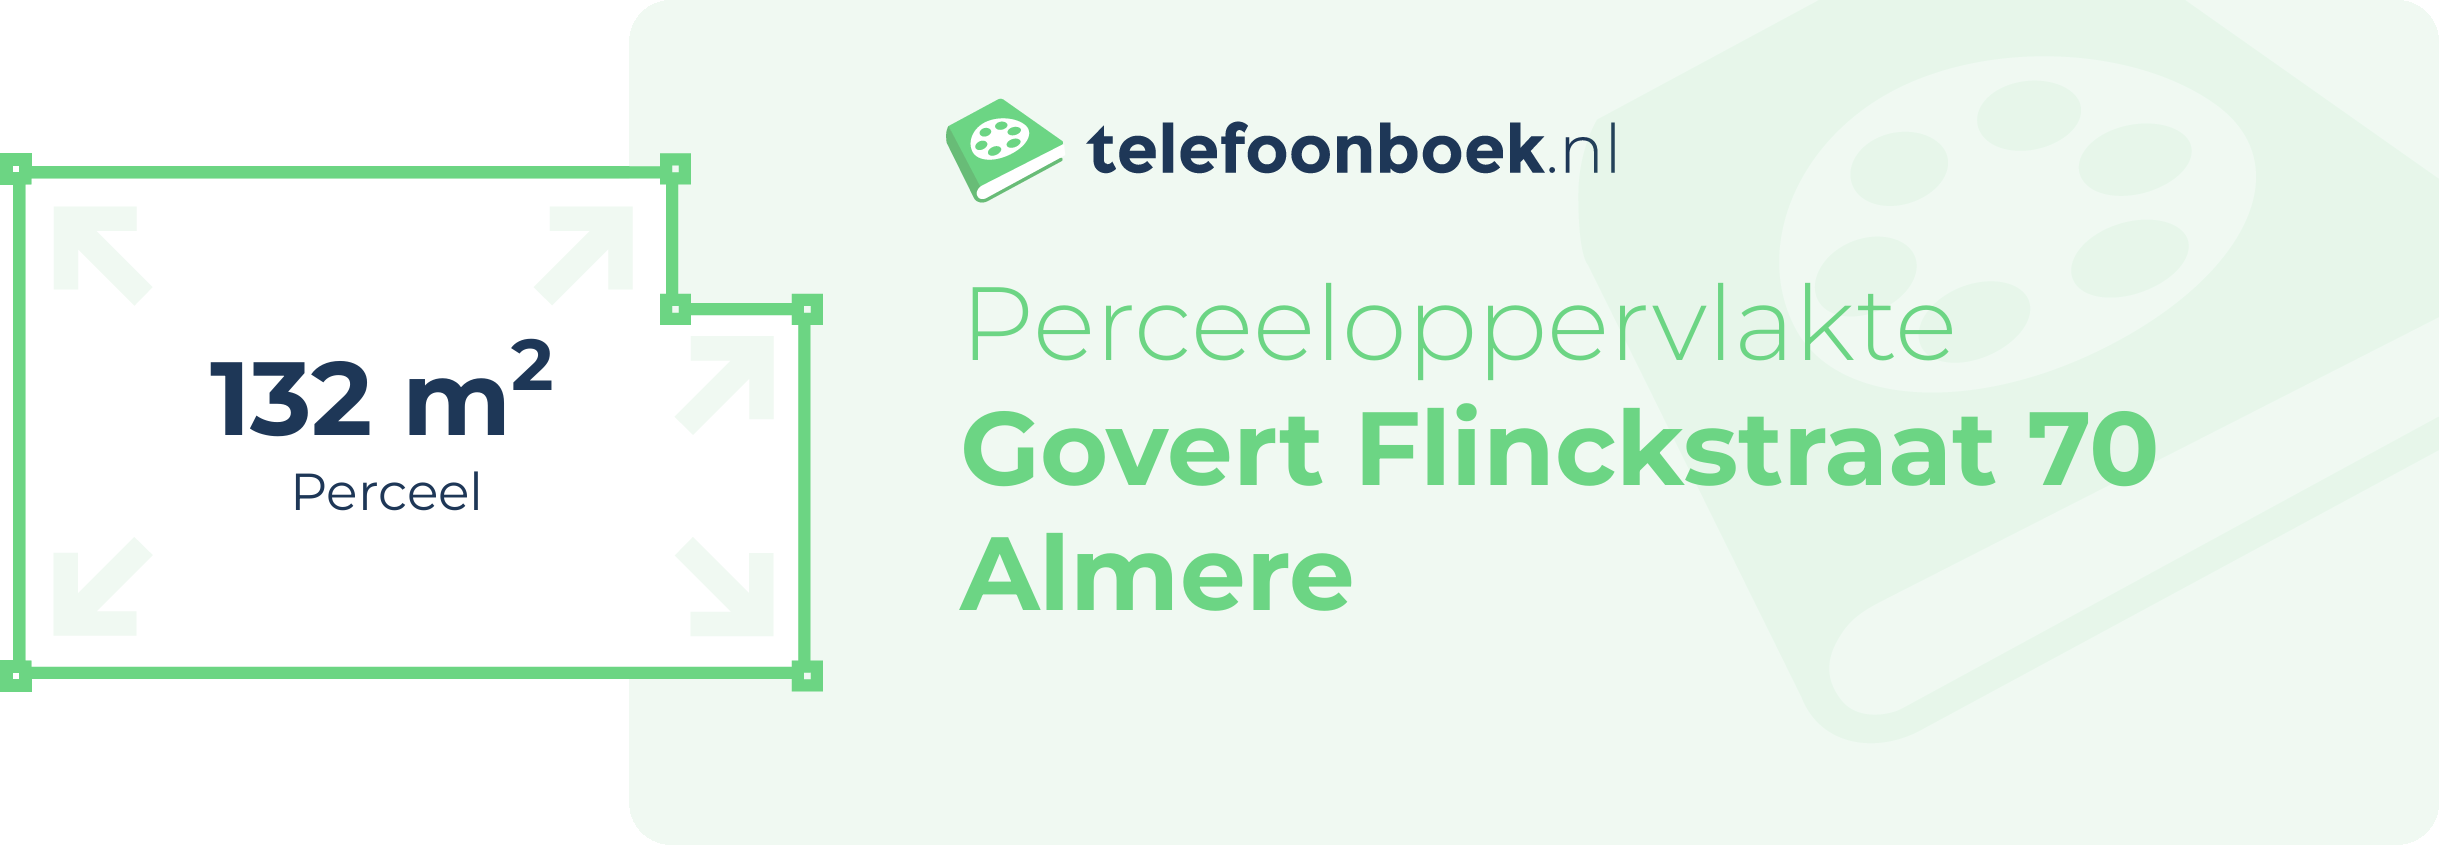 Perceeloppervlakte Govert Flinckstraat 70 Almere